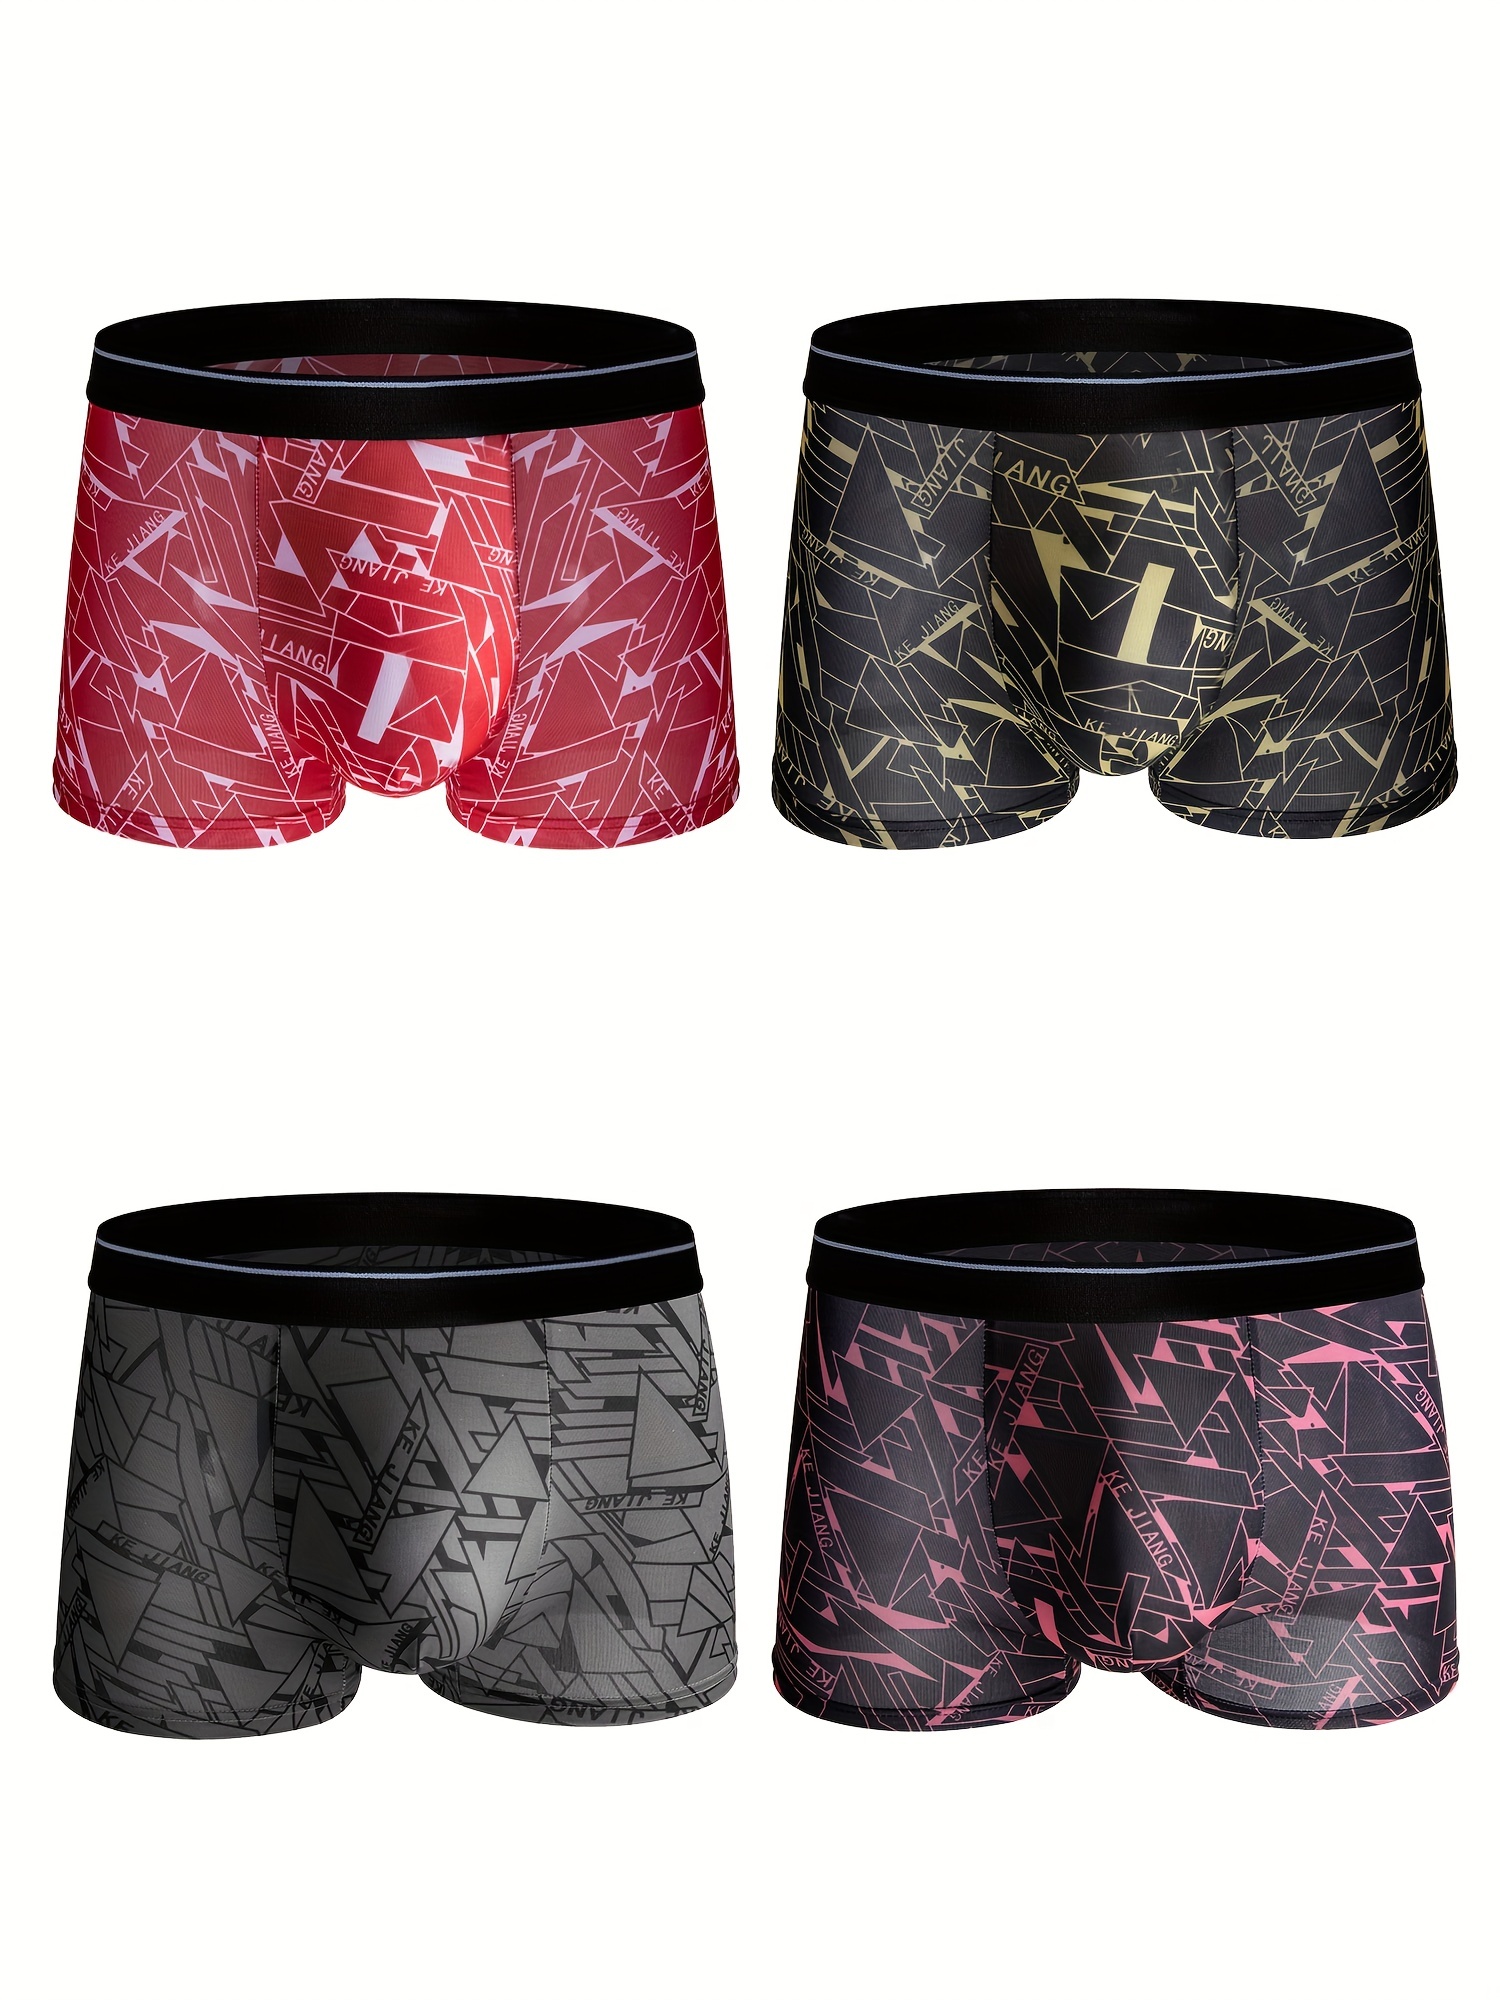 4pcs Men's Ice Silk Cool Comfy Elastic Summer Boxers Briefs Underwear, Slim  Fit Quick Drying Underpants, Multicolor Set